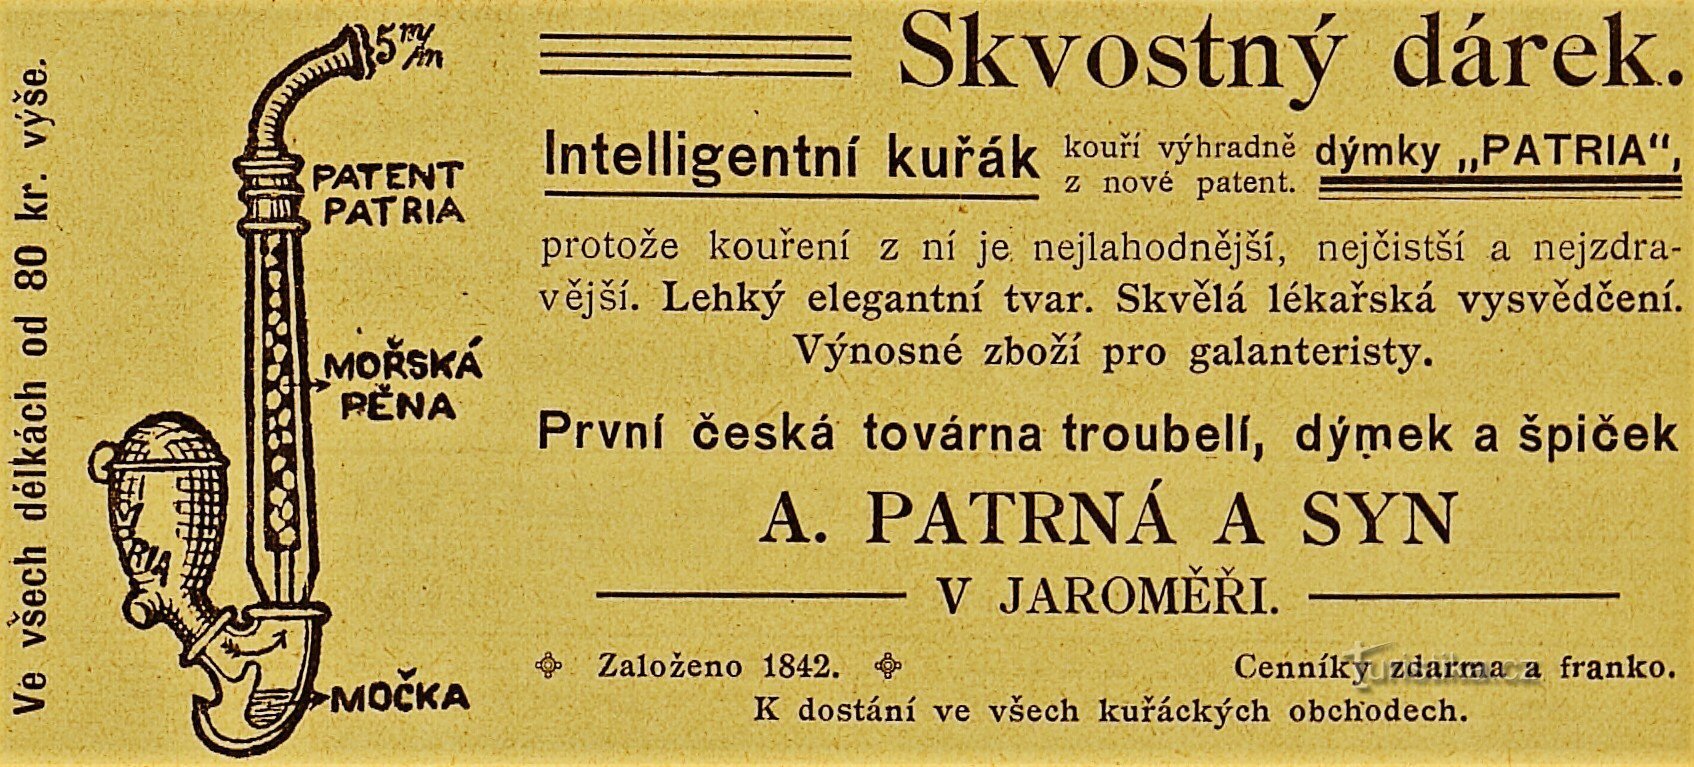 Moderne reklame for firmaet A. Patrná og søn i Jaroměř (1901)